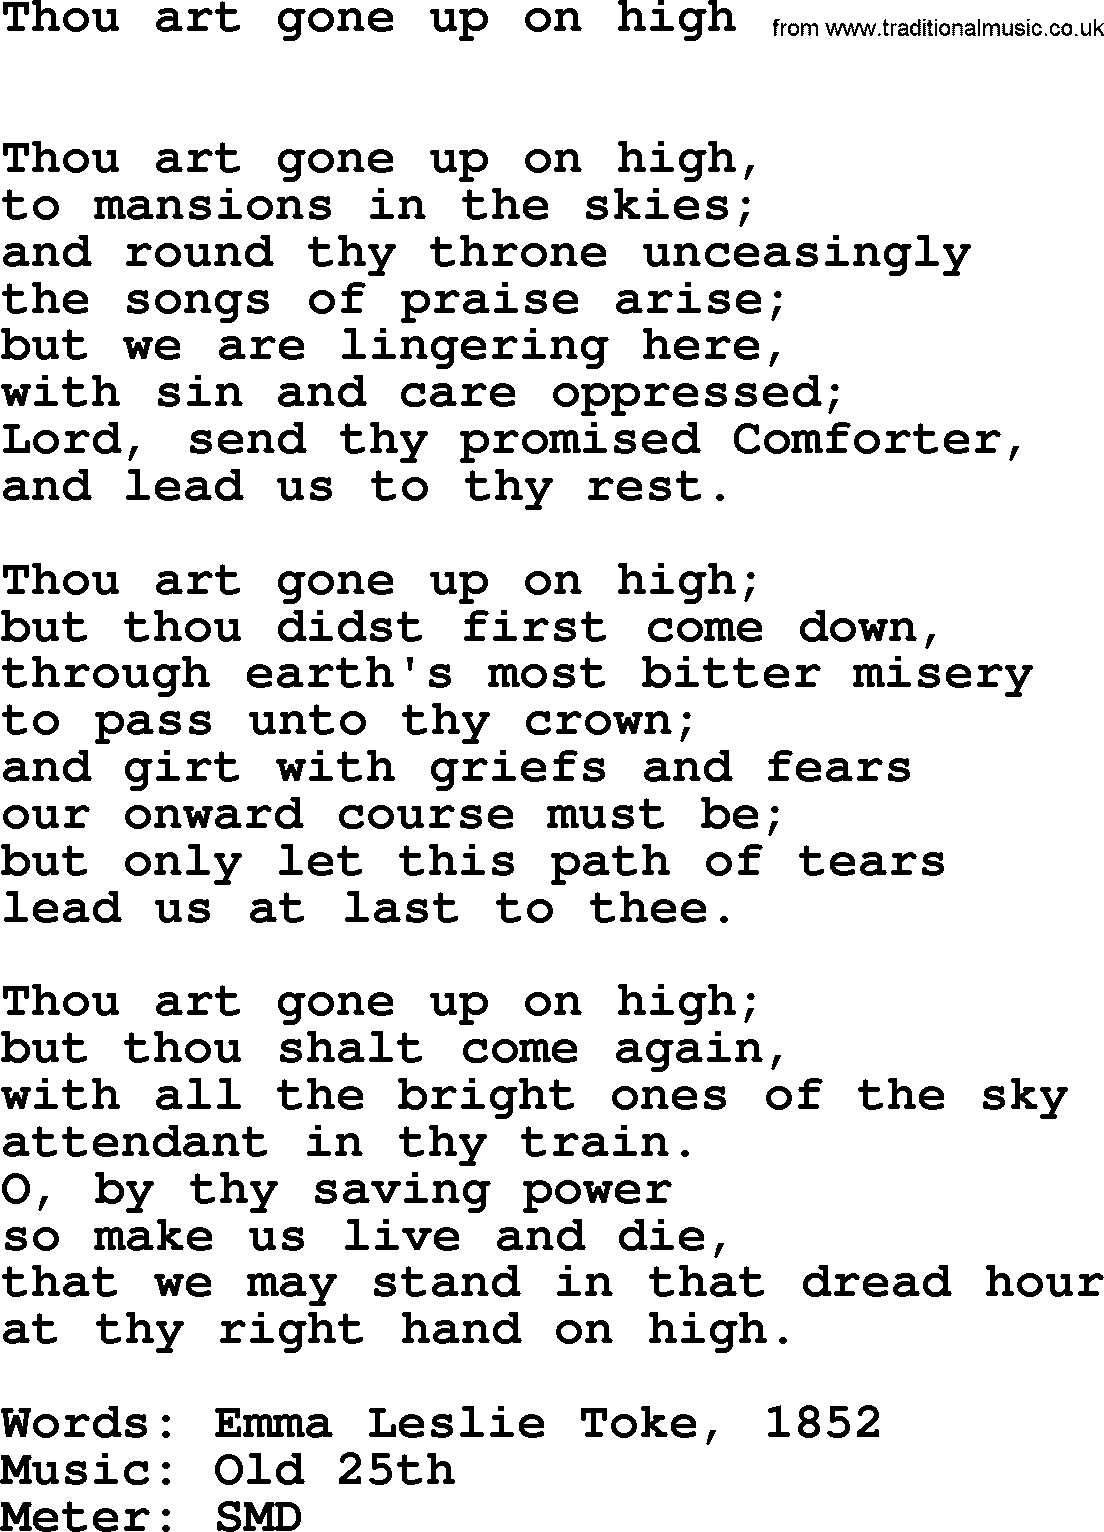 Book of Common Praise Hymn: Thou Art Gone Up On High.txt lyrics with midi music